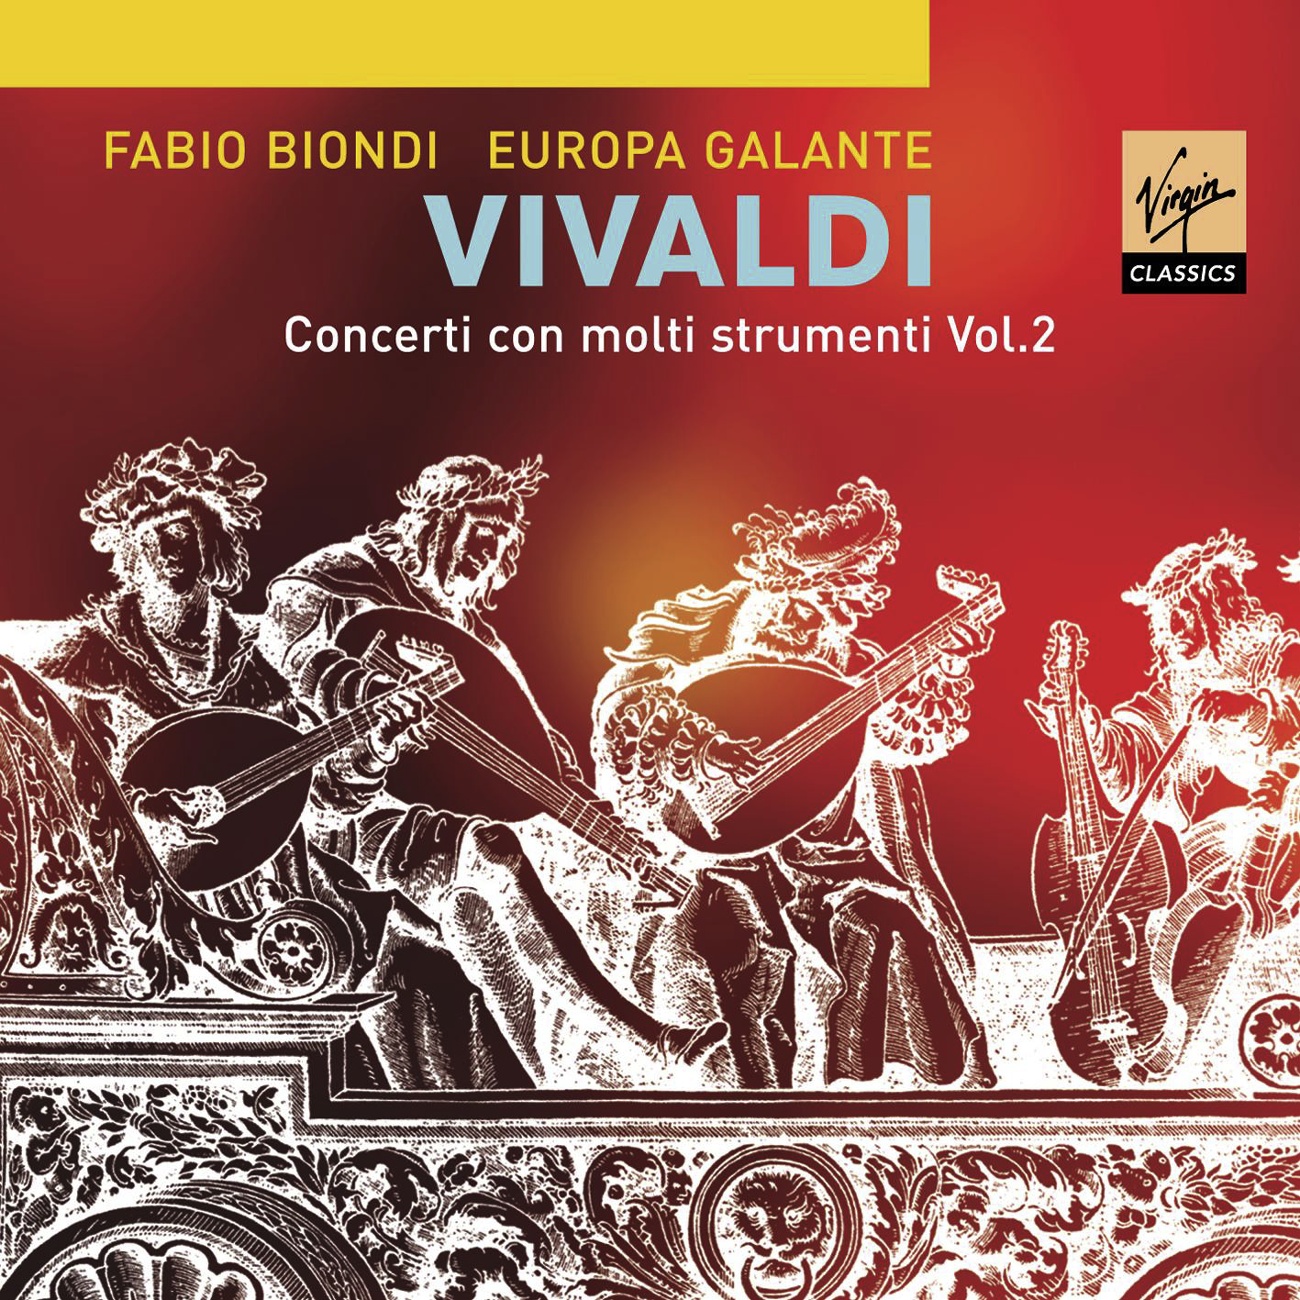 Concerto for 2 violins, 2 recorders, 2 oboe, bassoon & strings in D minor RV566:Allegro assai